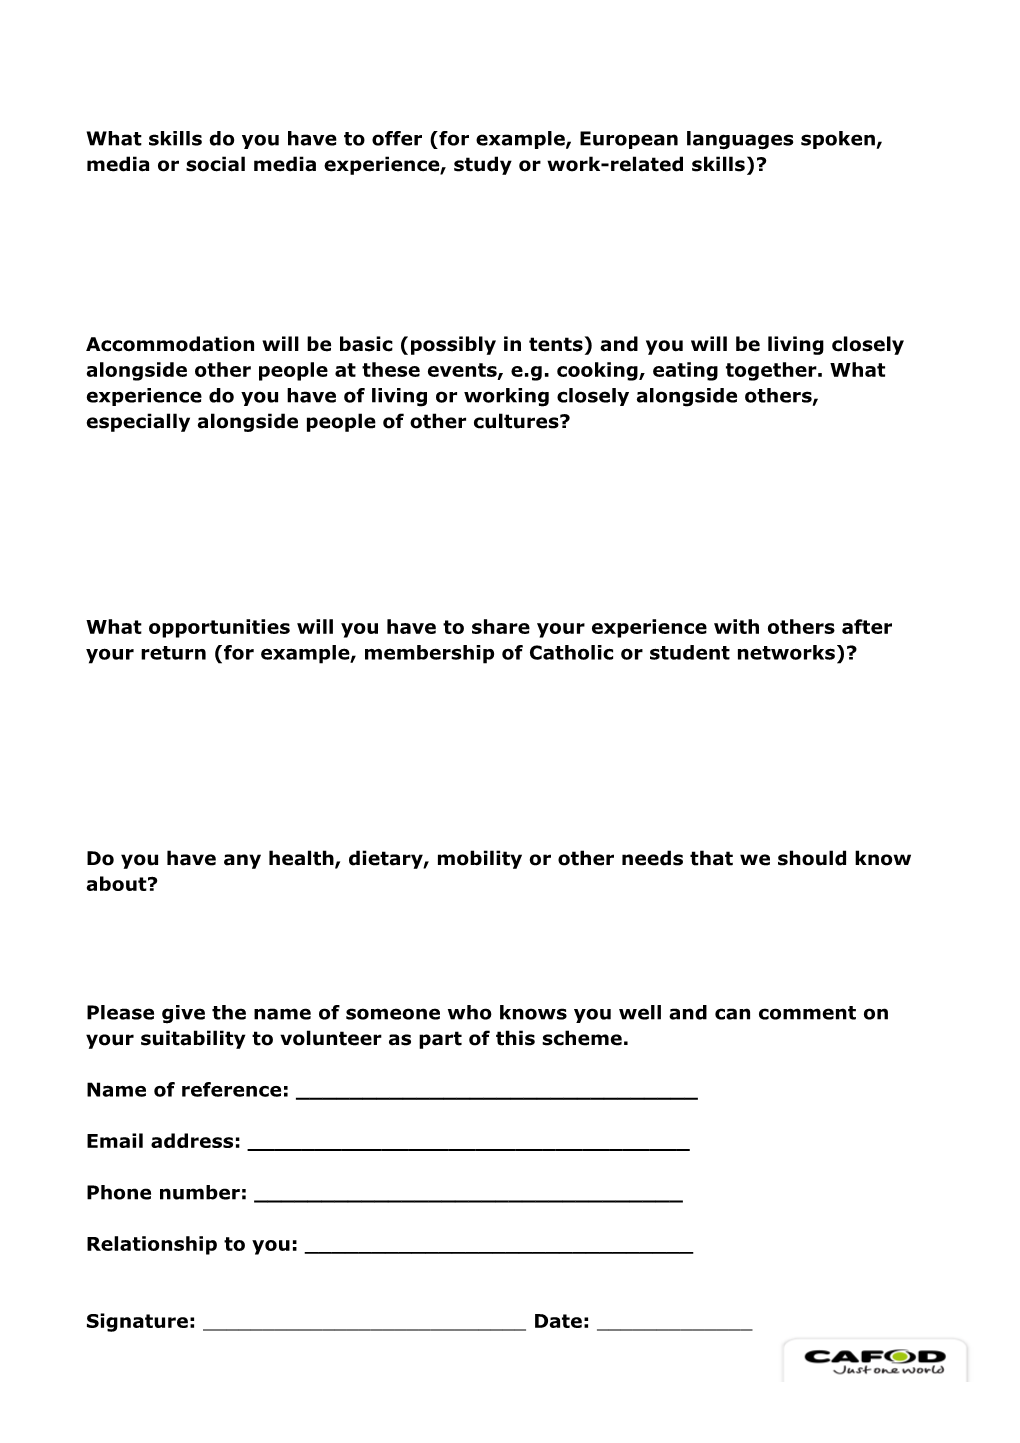 CAFOD Climate Champion Application Form